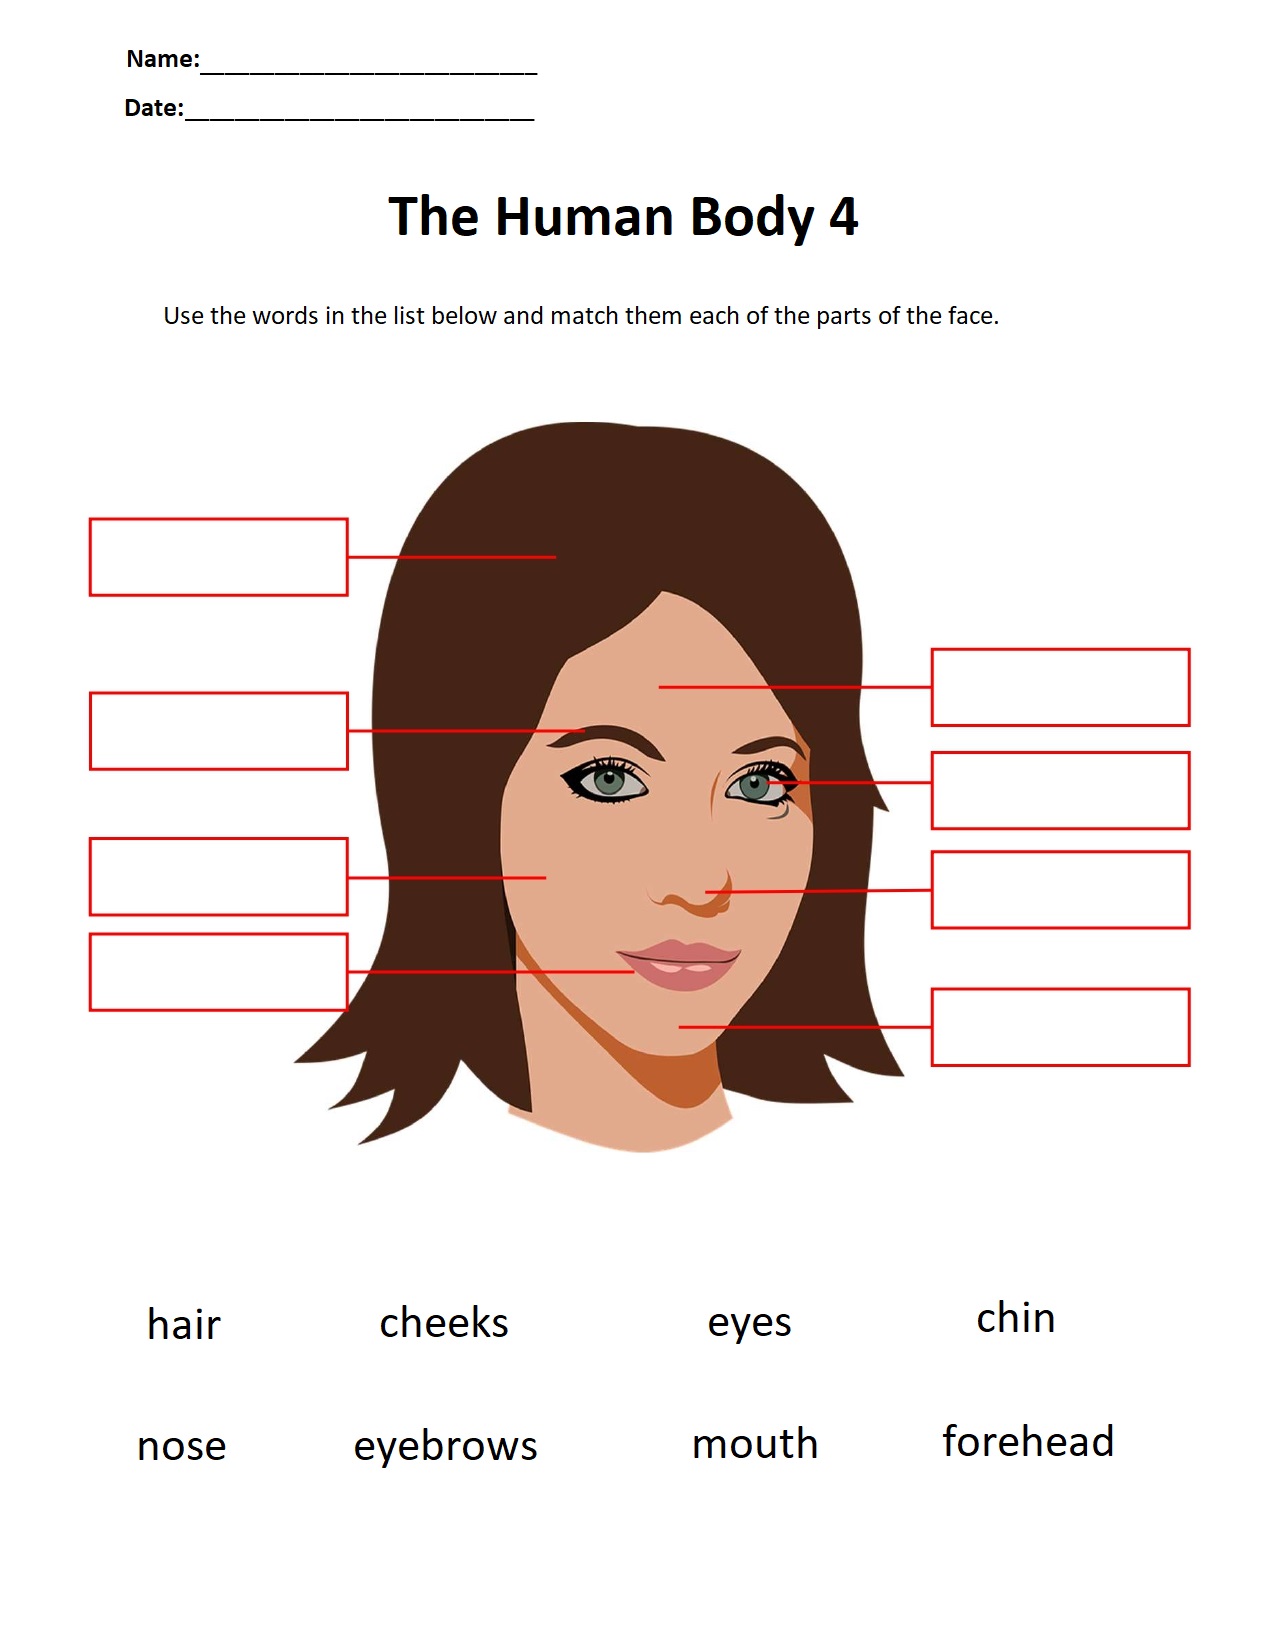 The Human Body 4.jpg